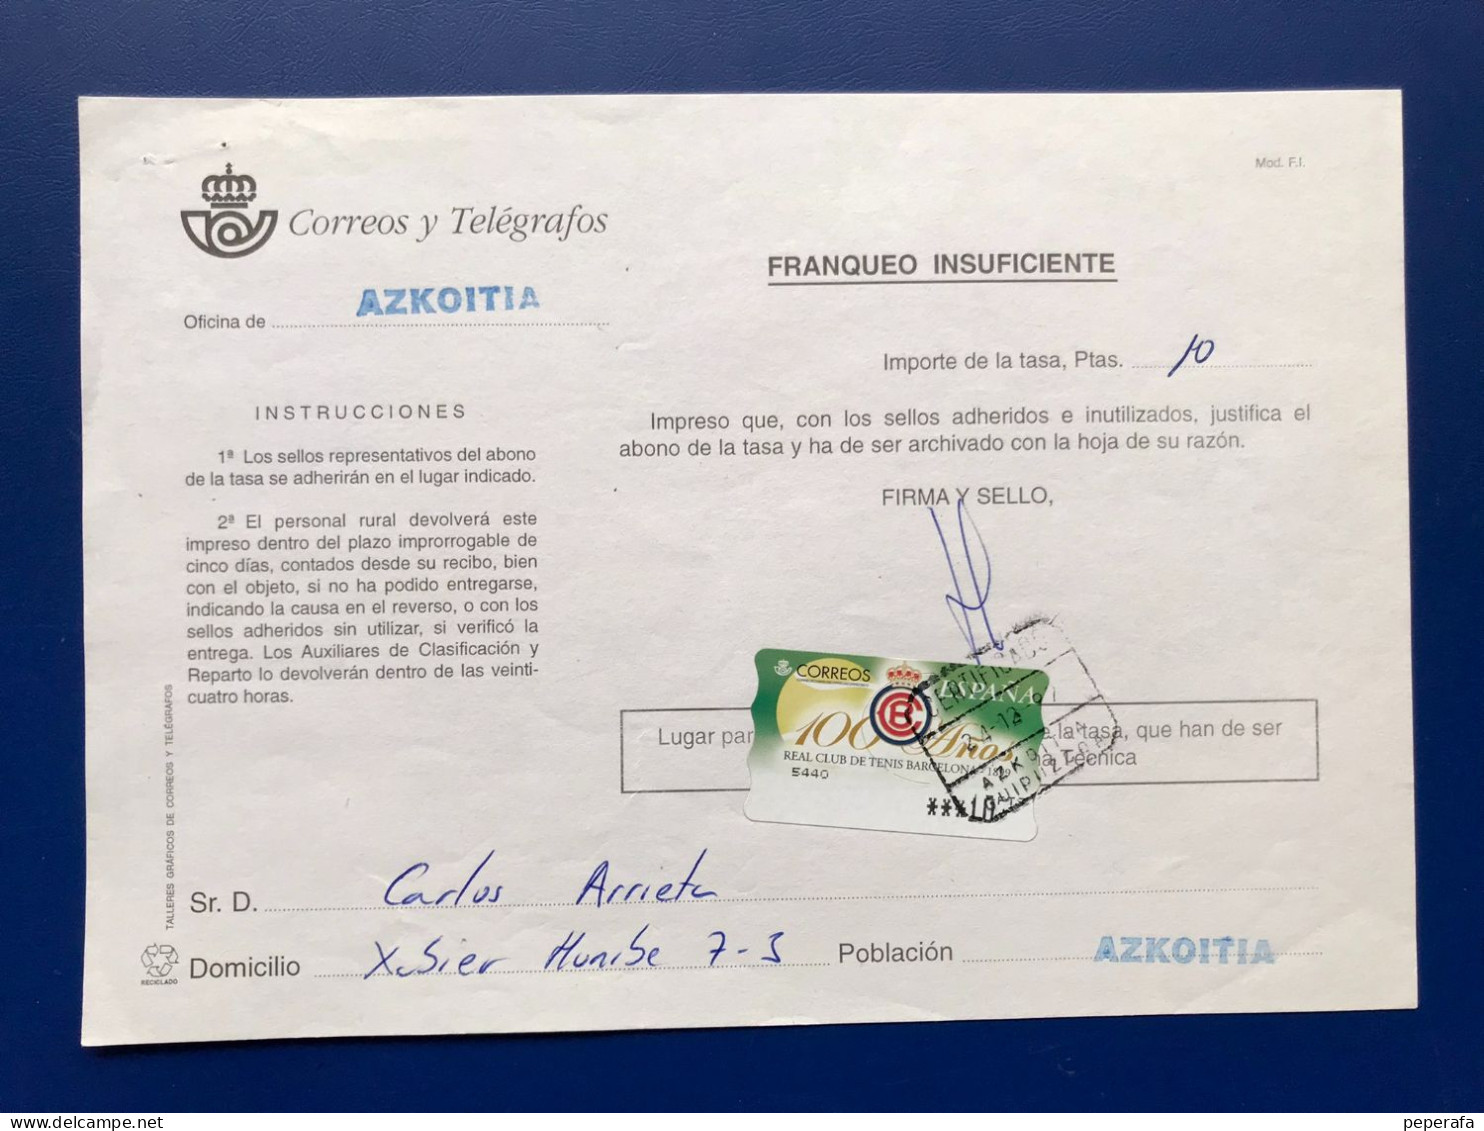 España Spain 1999, ATM 100 AÑOS RC TENIS BARCELONA, DOCUMENTO POSTAL FRANQUEO INSUFICIENTE 10 PTS, EPELSA, RARO!!! - Machine Labels [ATM]